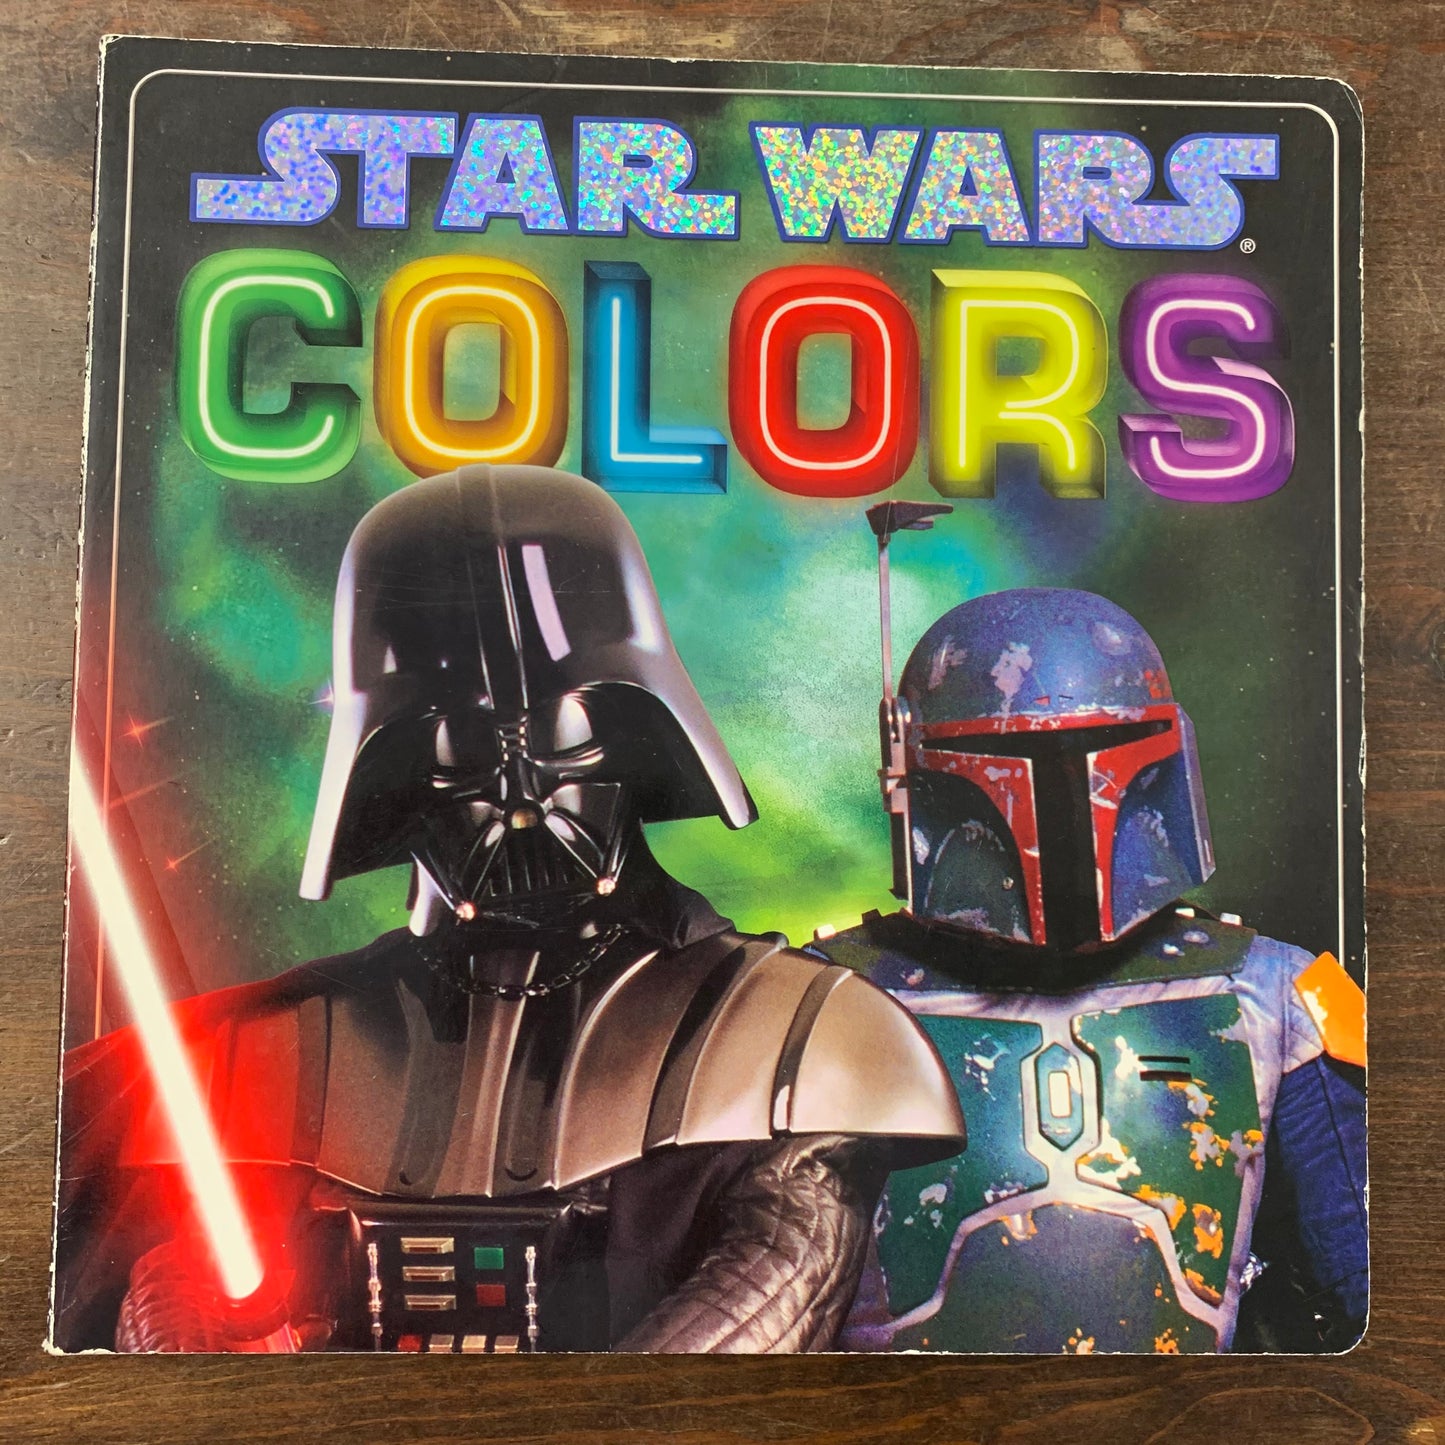 Star Wars Colors